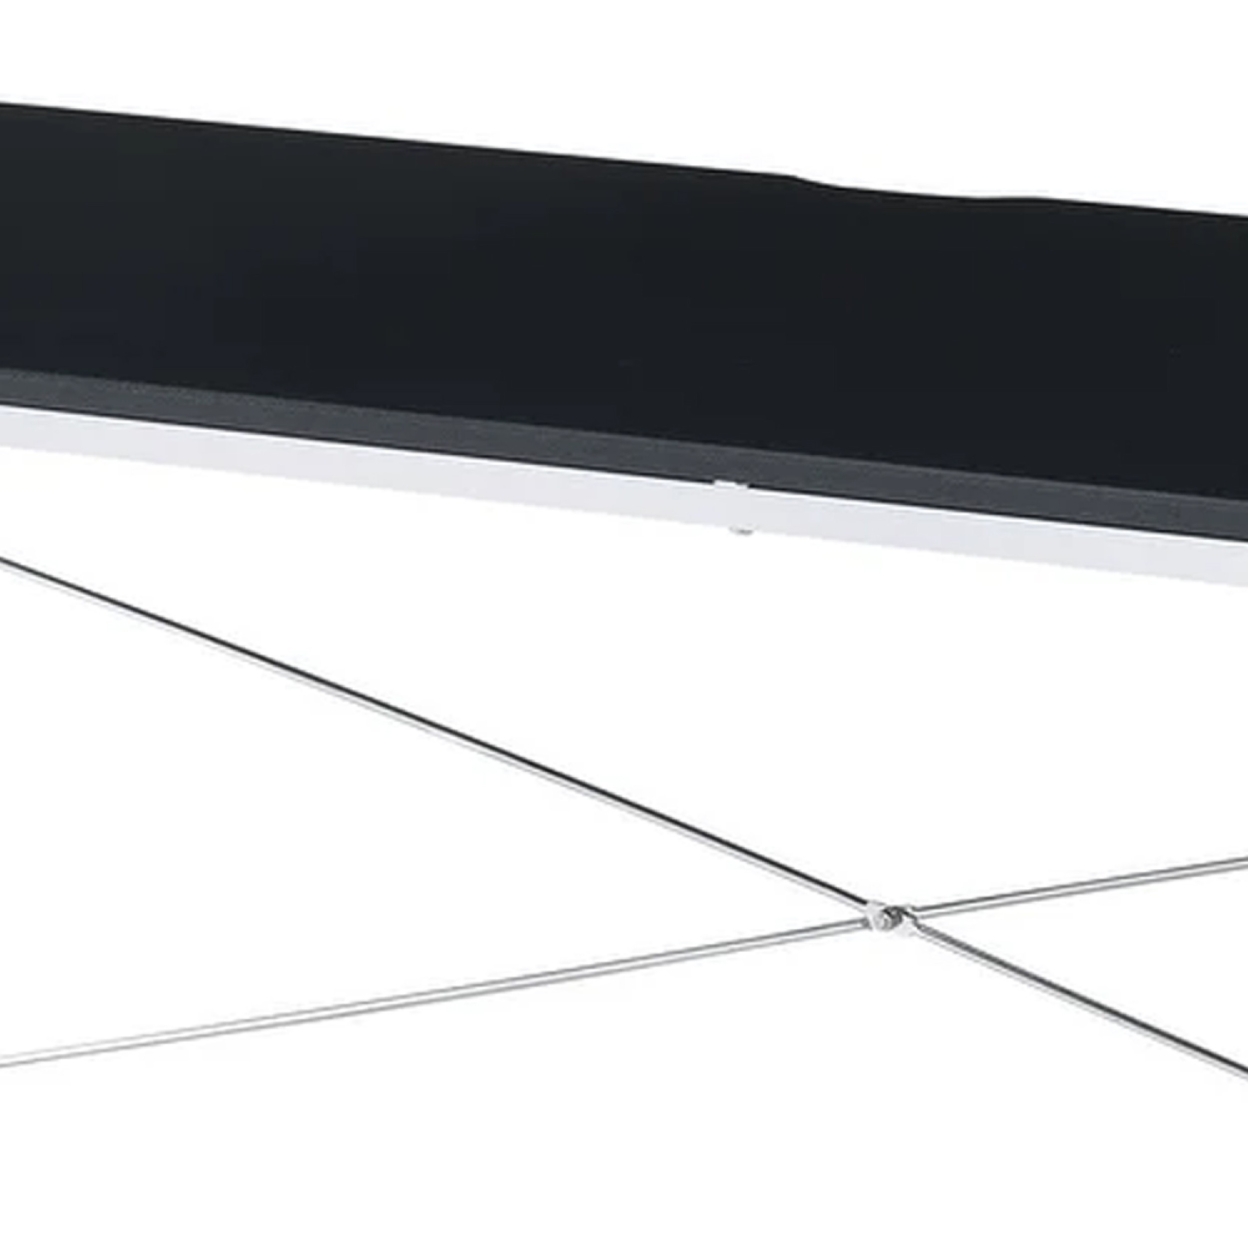 Mayo 47 Inch Rectangular Desk Console Table, Crossed Bars, Black, Chrome